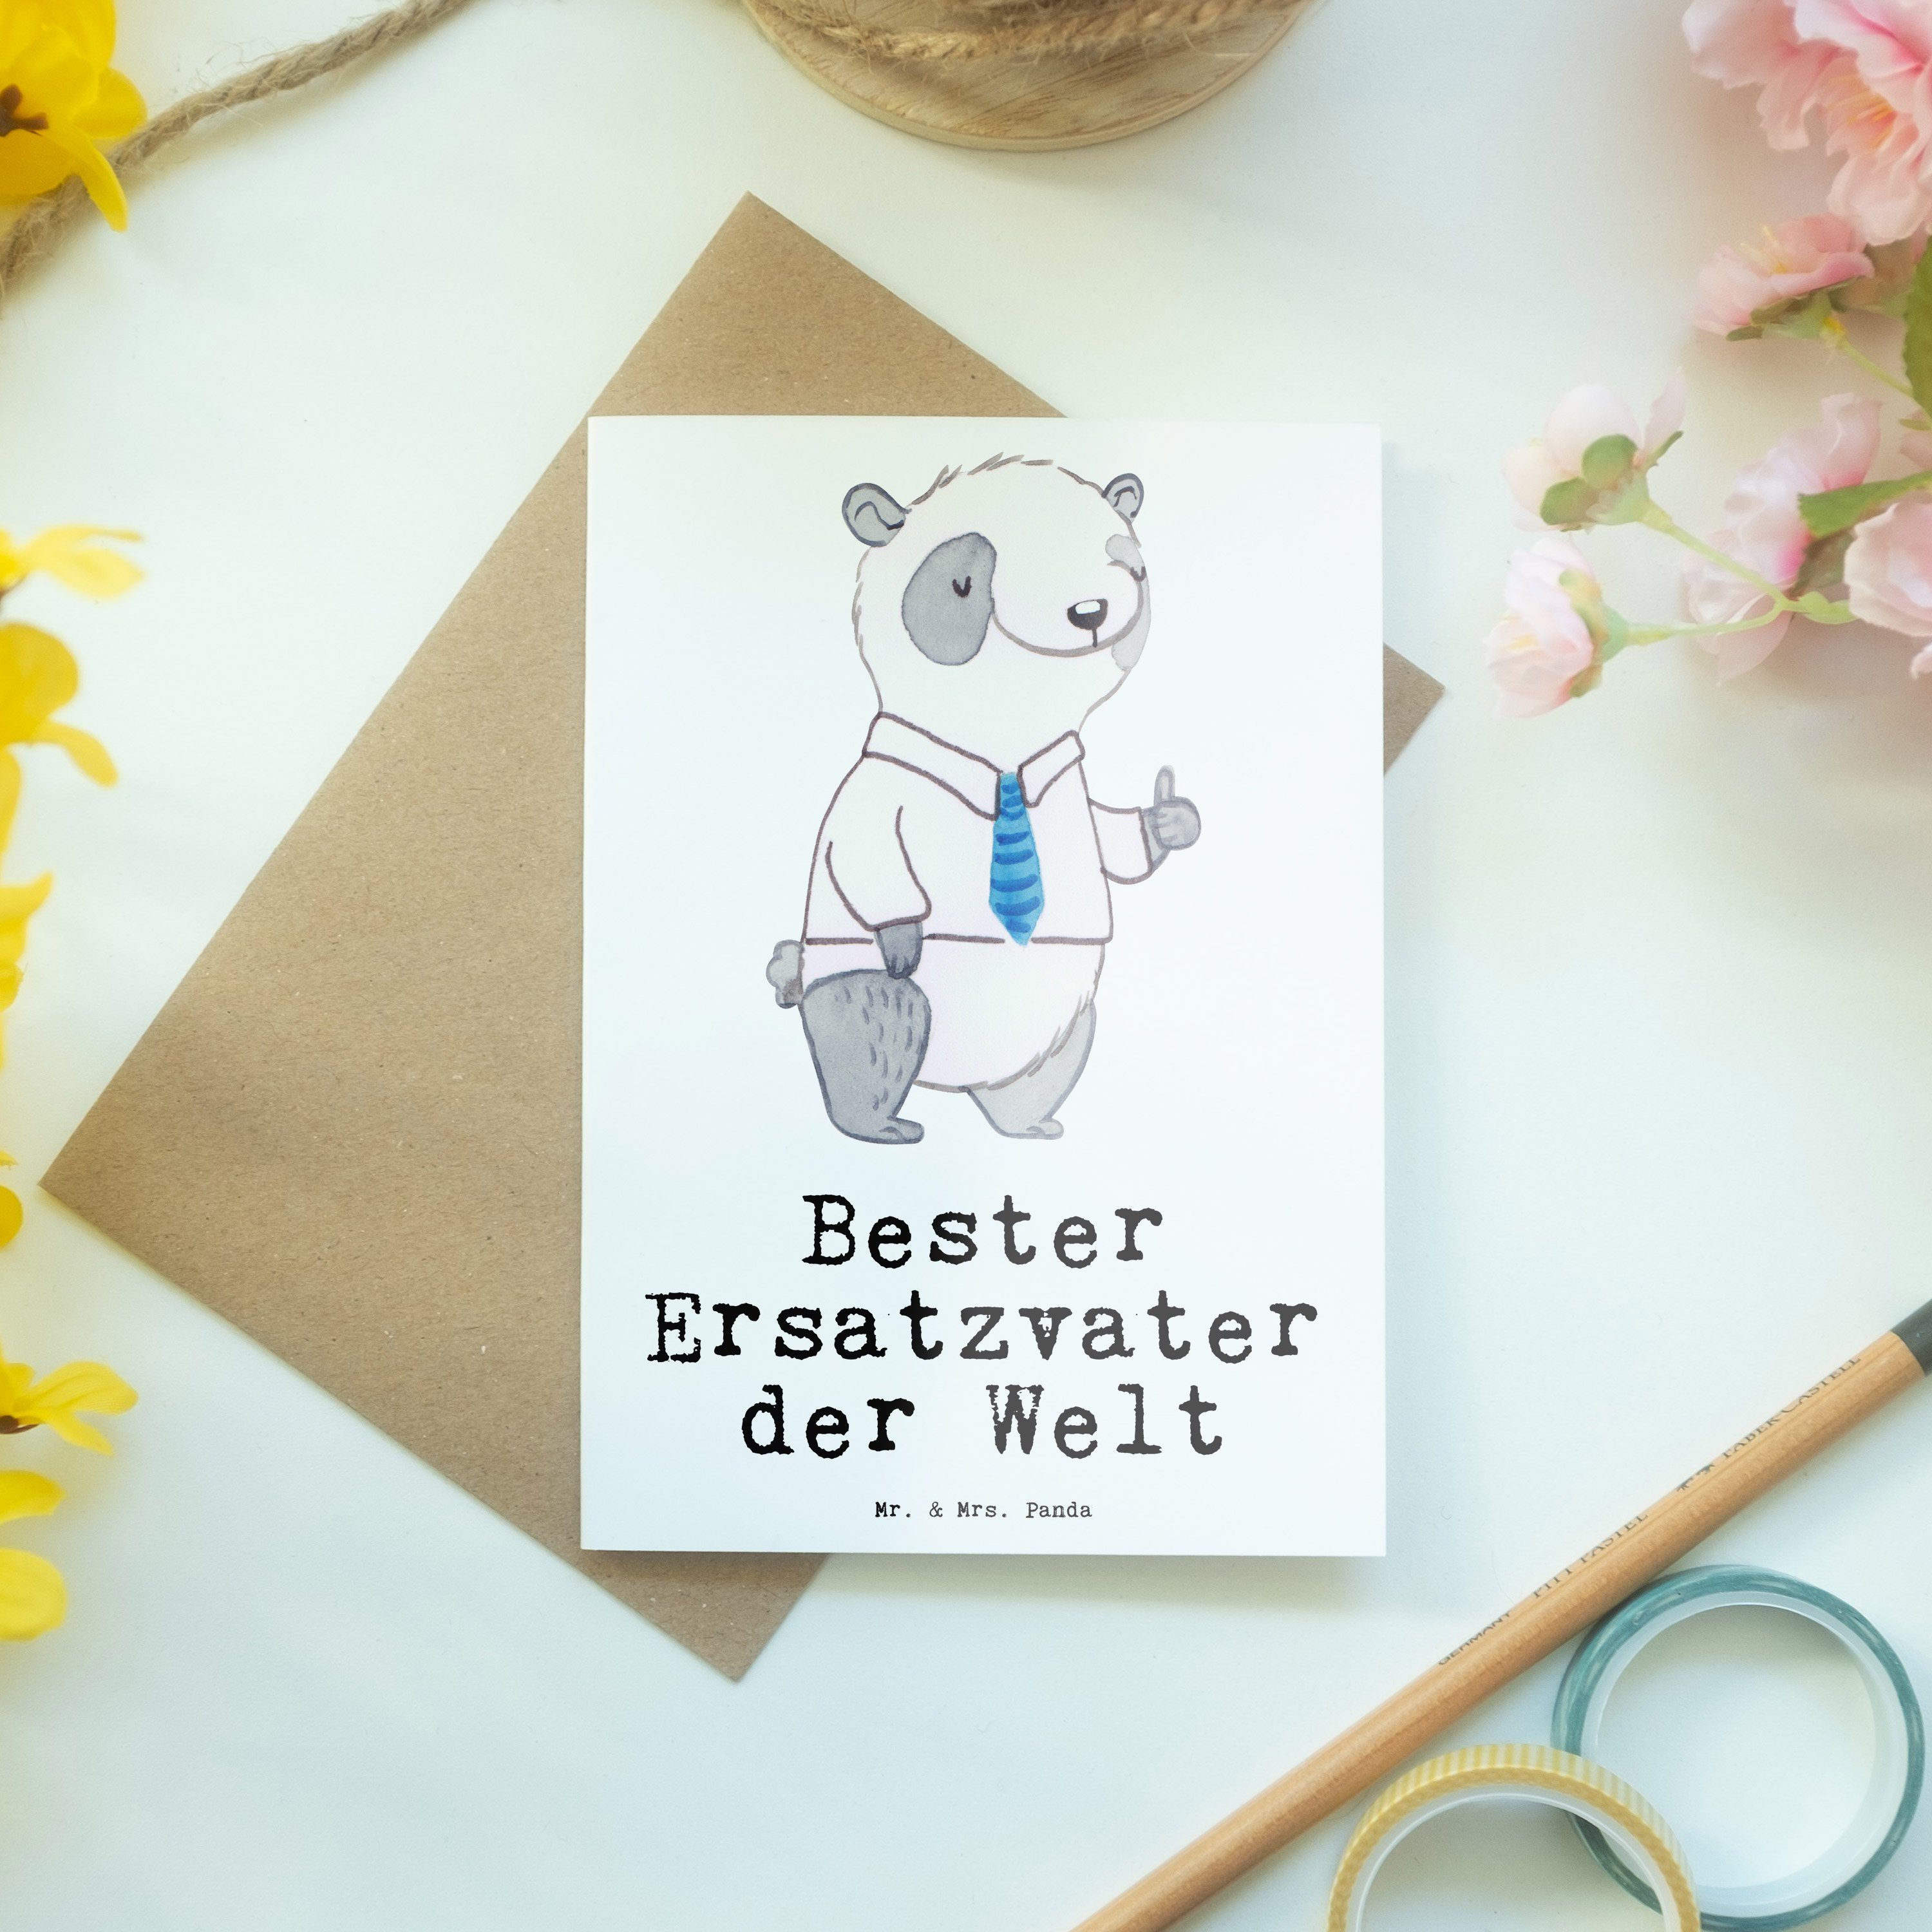 Panda Bester Panda - der Weiß Mr. Geburtstagskarte - Mrs. Grußkarte Welt Ersatzvater Geschenk, &